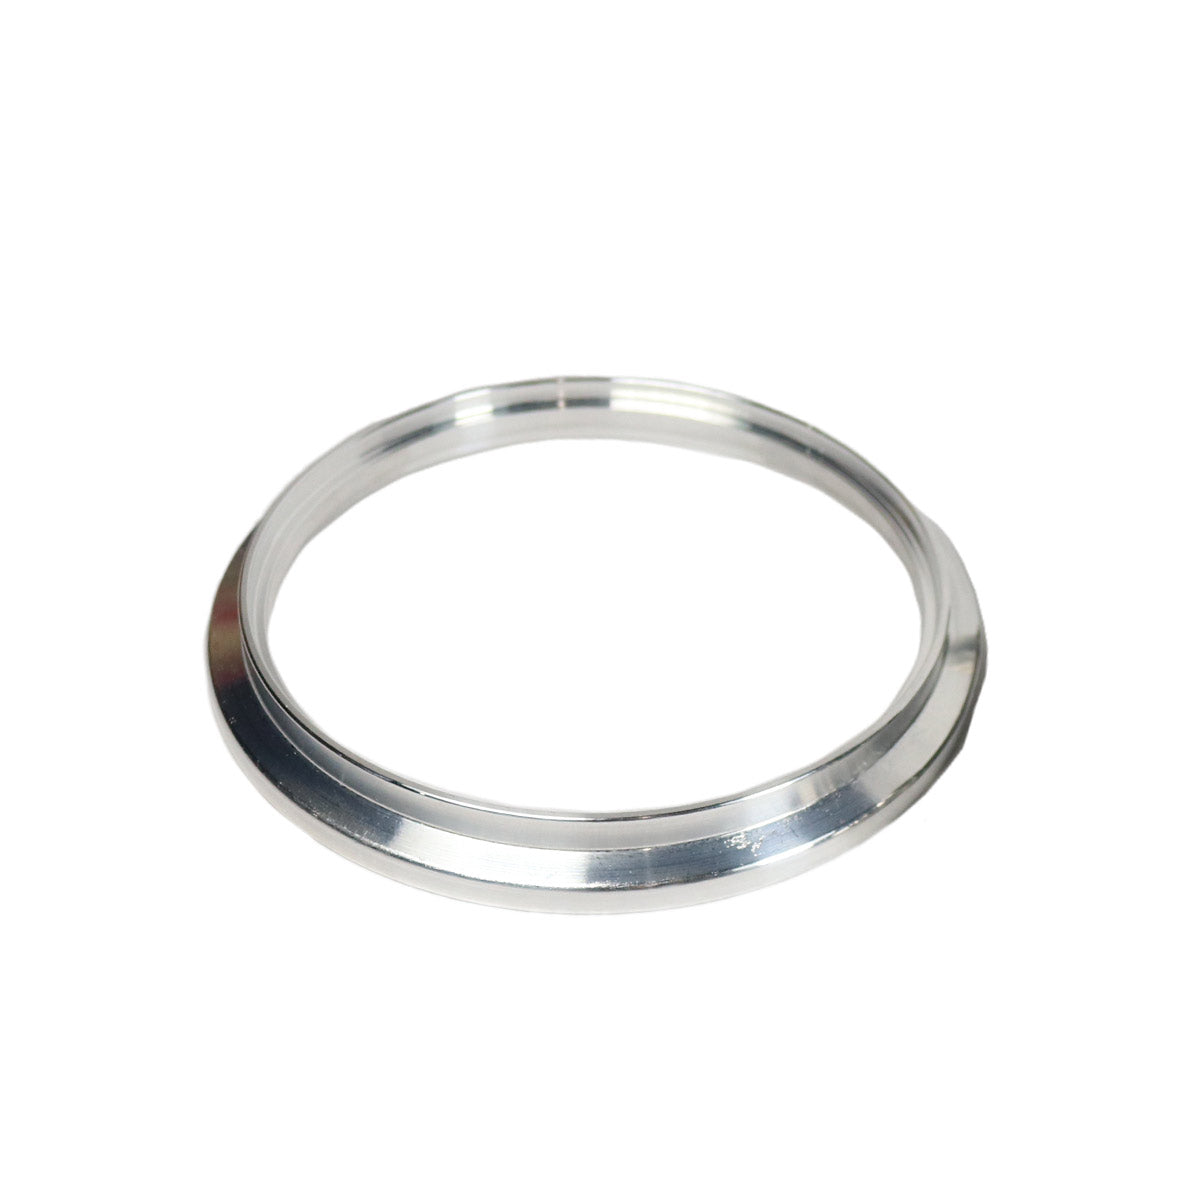 Centering Ring KF-16 Vacuum Fittings, ISO-KF Flange Size NW-16, Aluminum &  Buna O-Ring (lot of 1pcs): Amazon.com: Industrial & Scientific